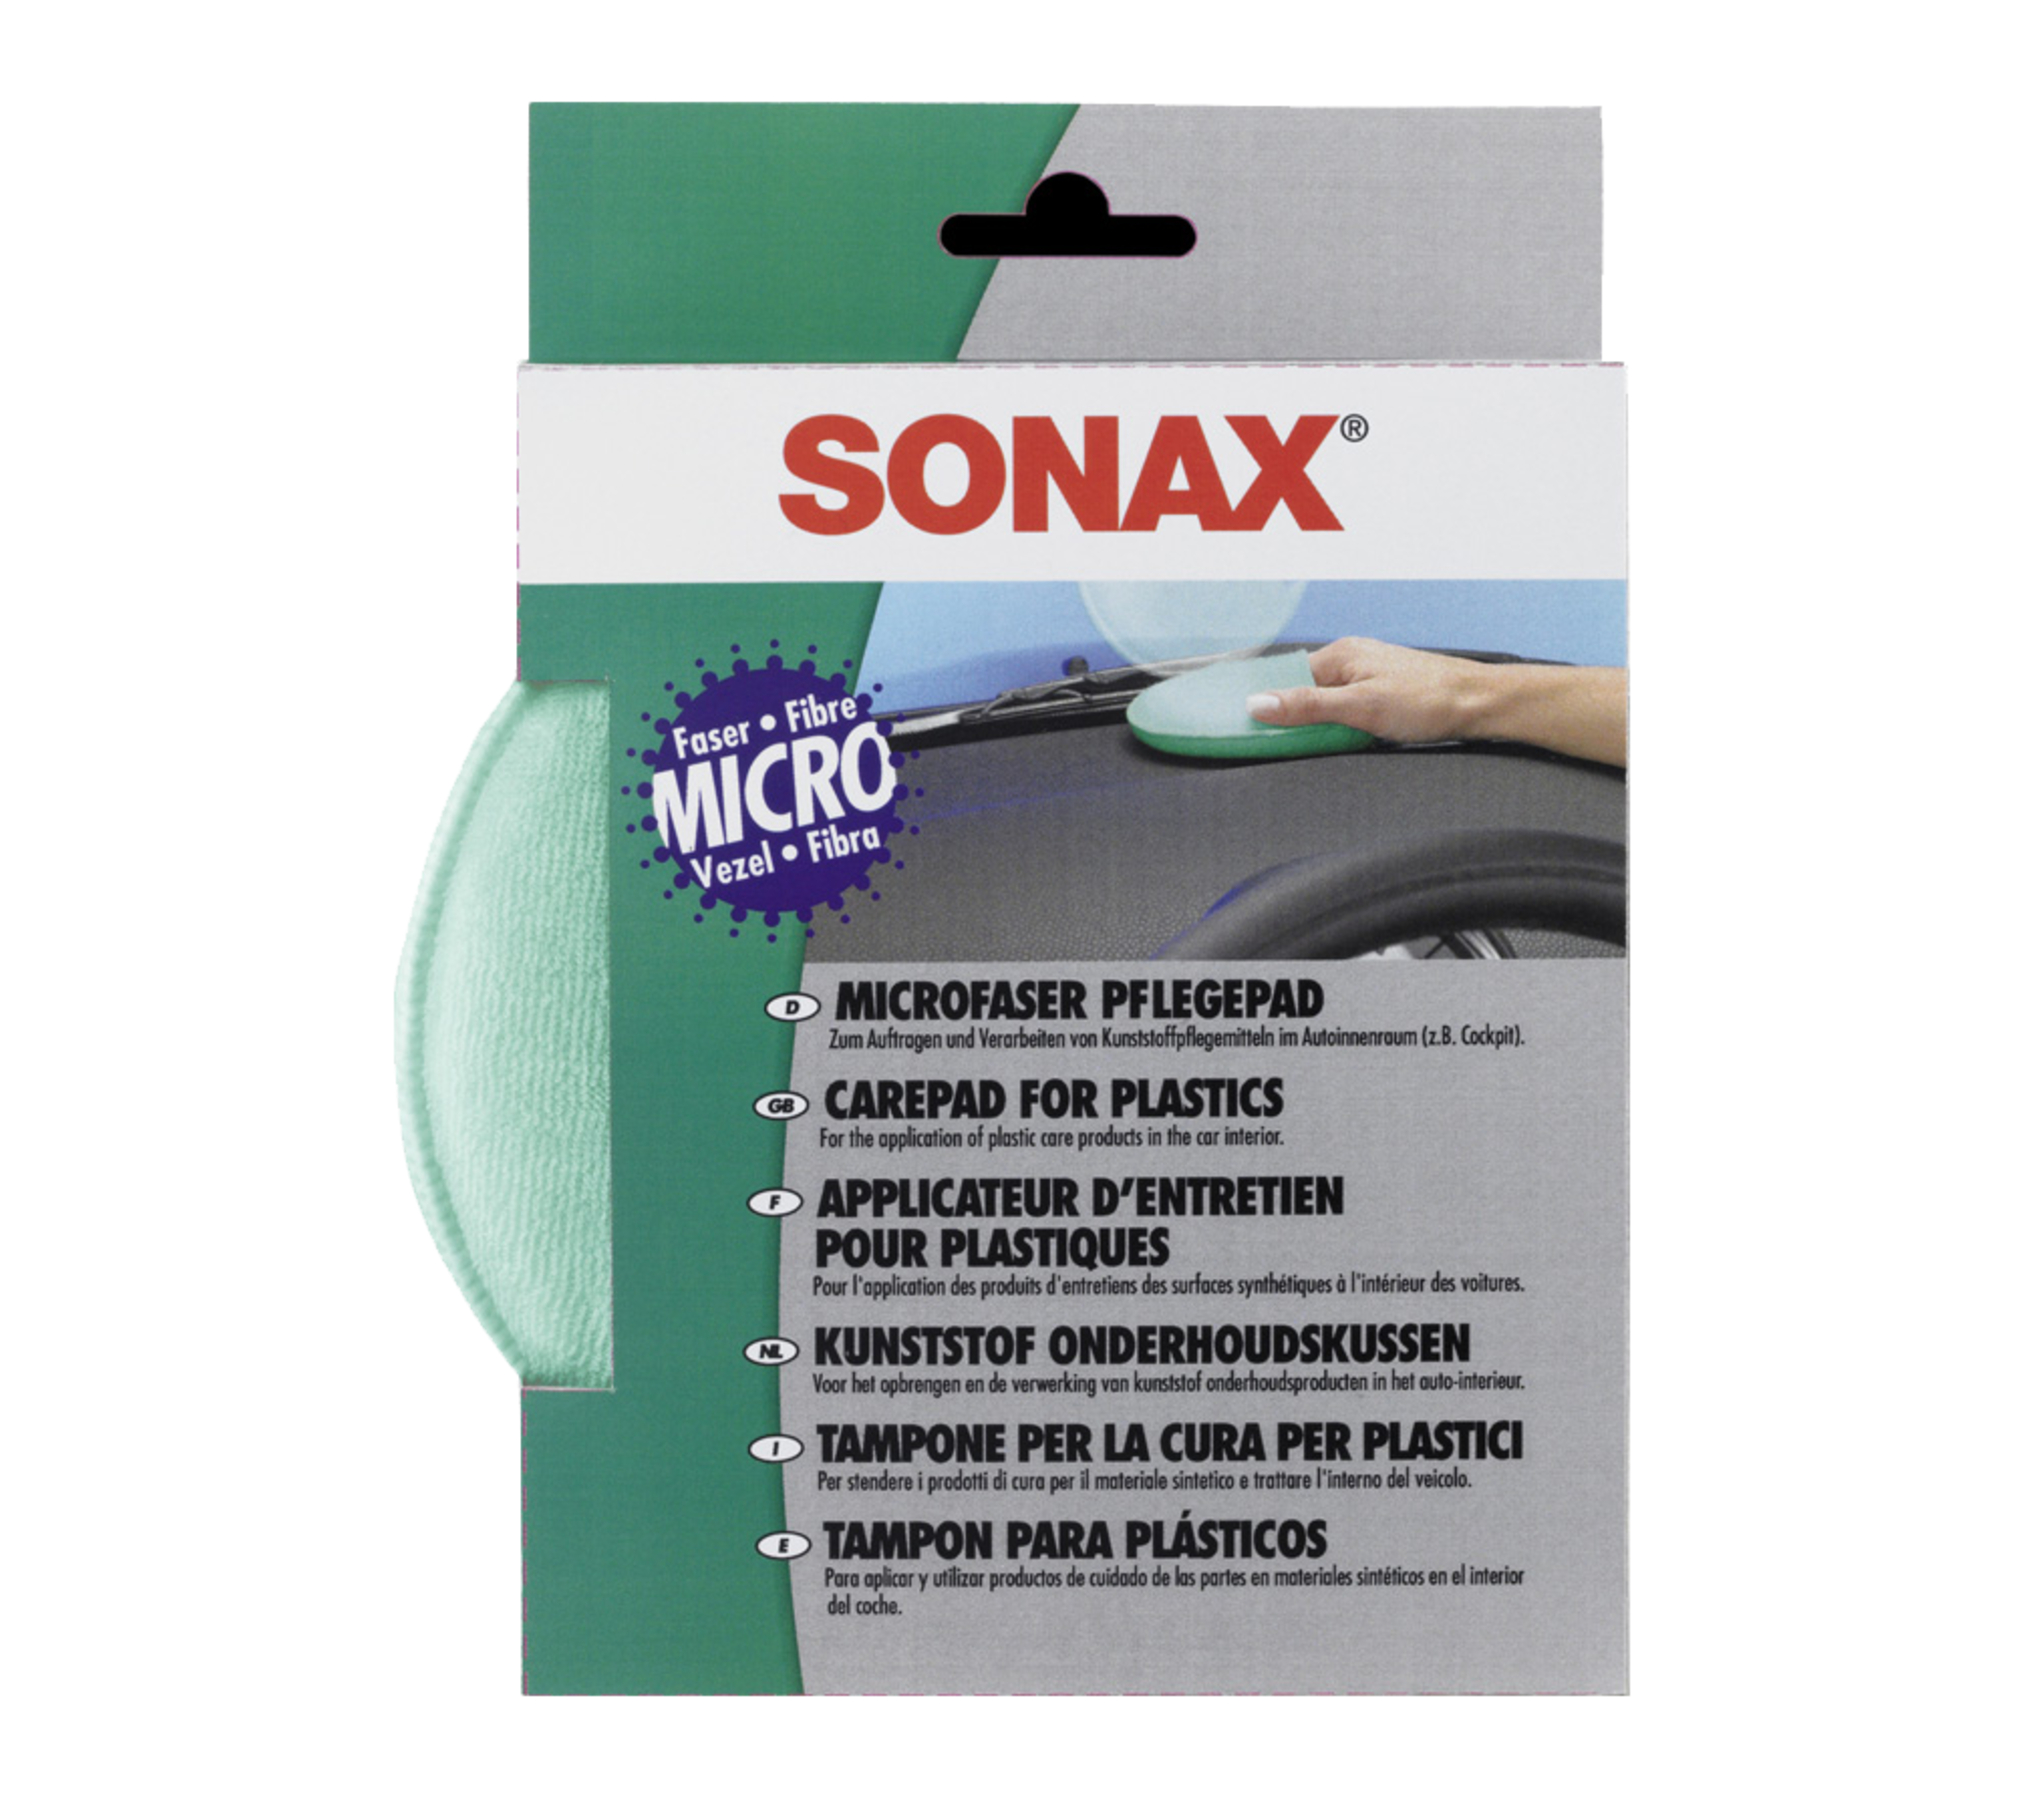 SONAX Microfaser Pflegepad